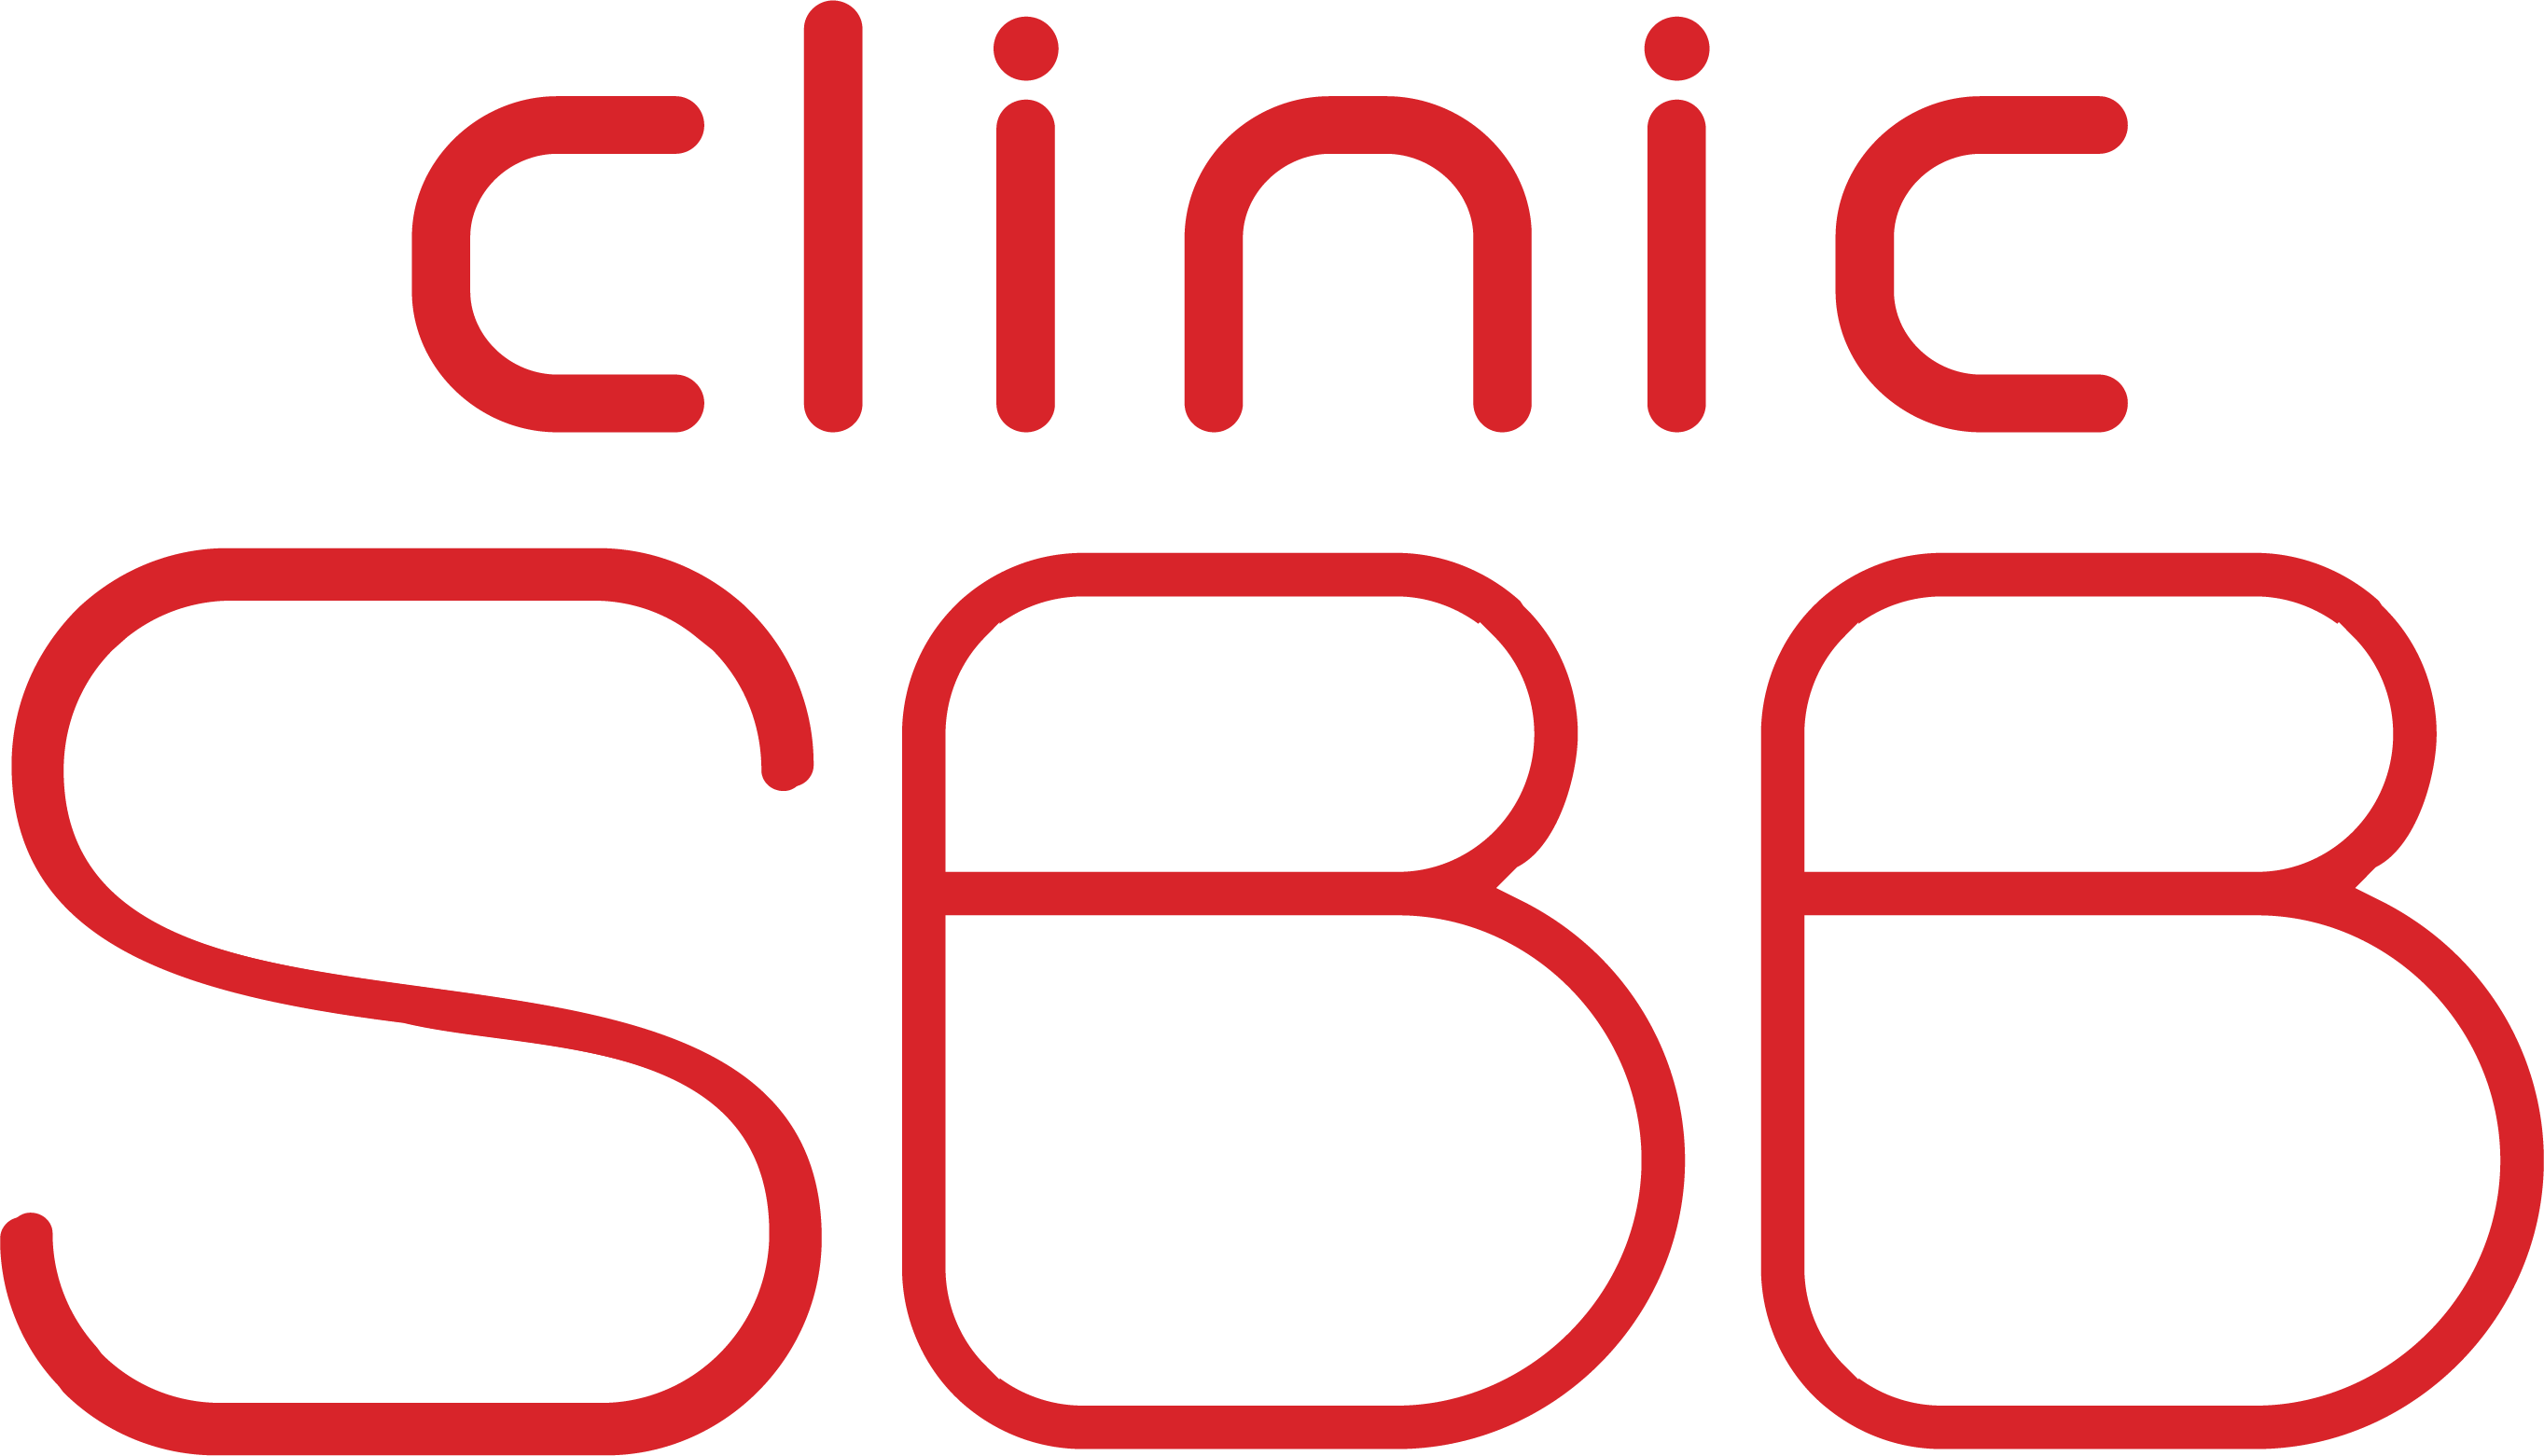 Clinic Sbb